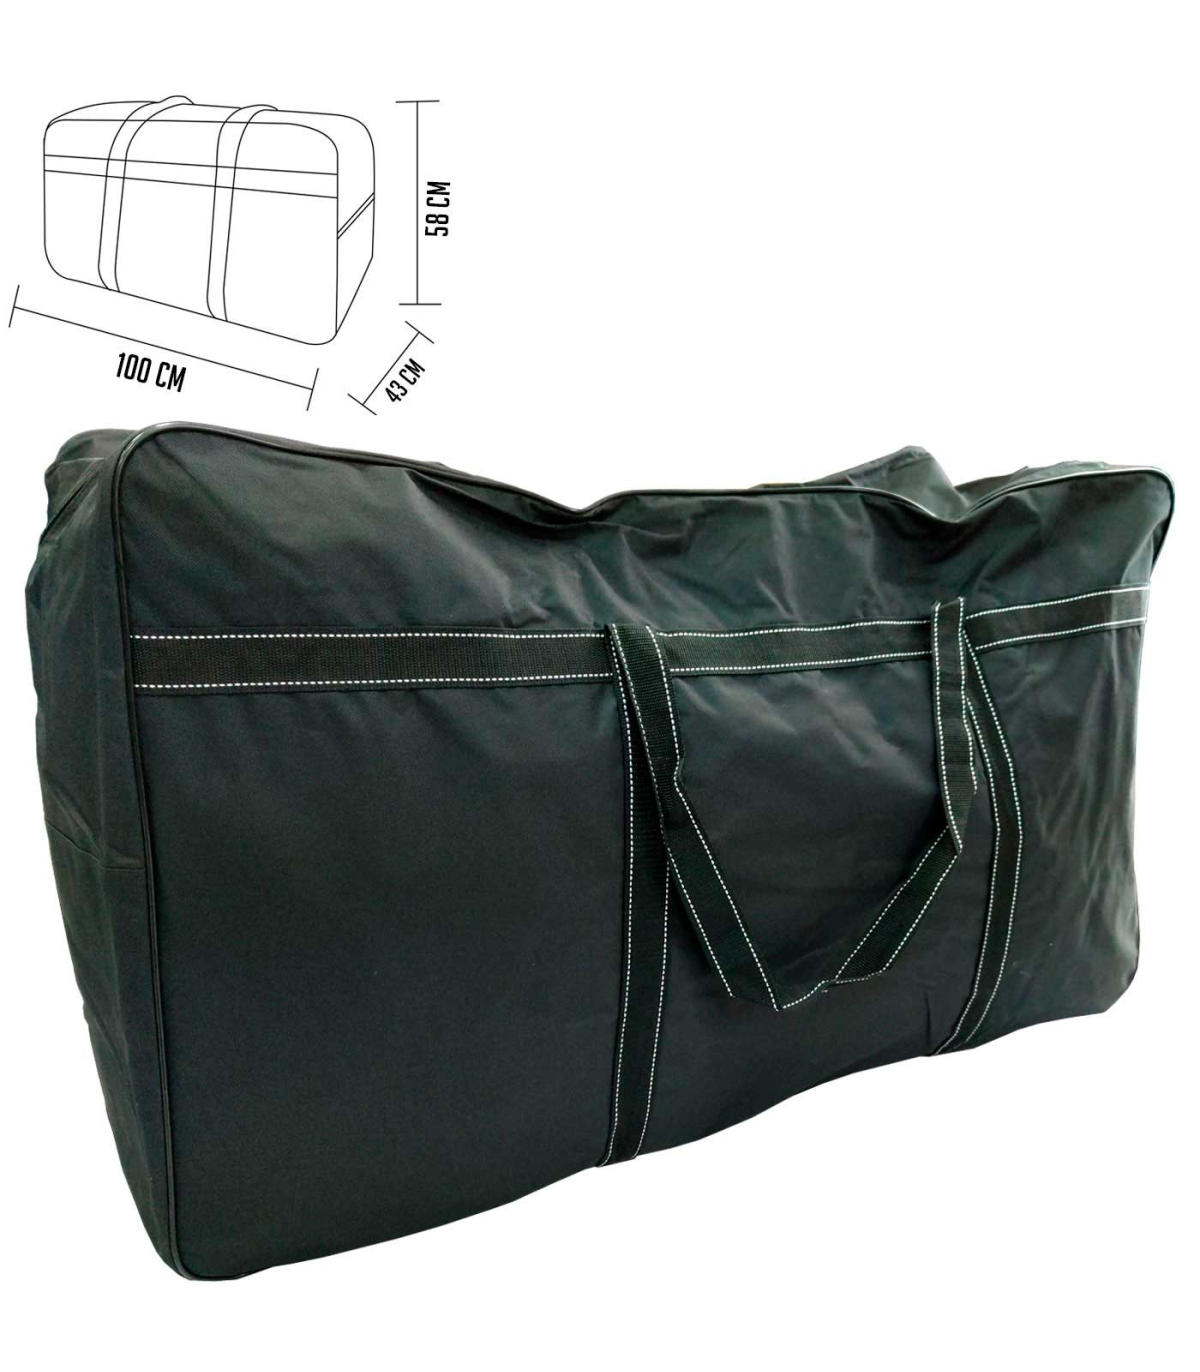 Tradineur - Bolsa de viaje de tela con asas y correa de hombro - Fabricado  en Poliéster - bolsillo con cremallera, plegable, lig